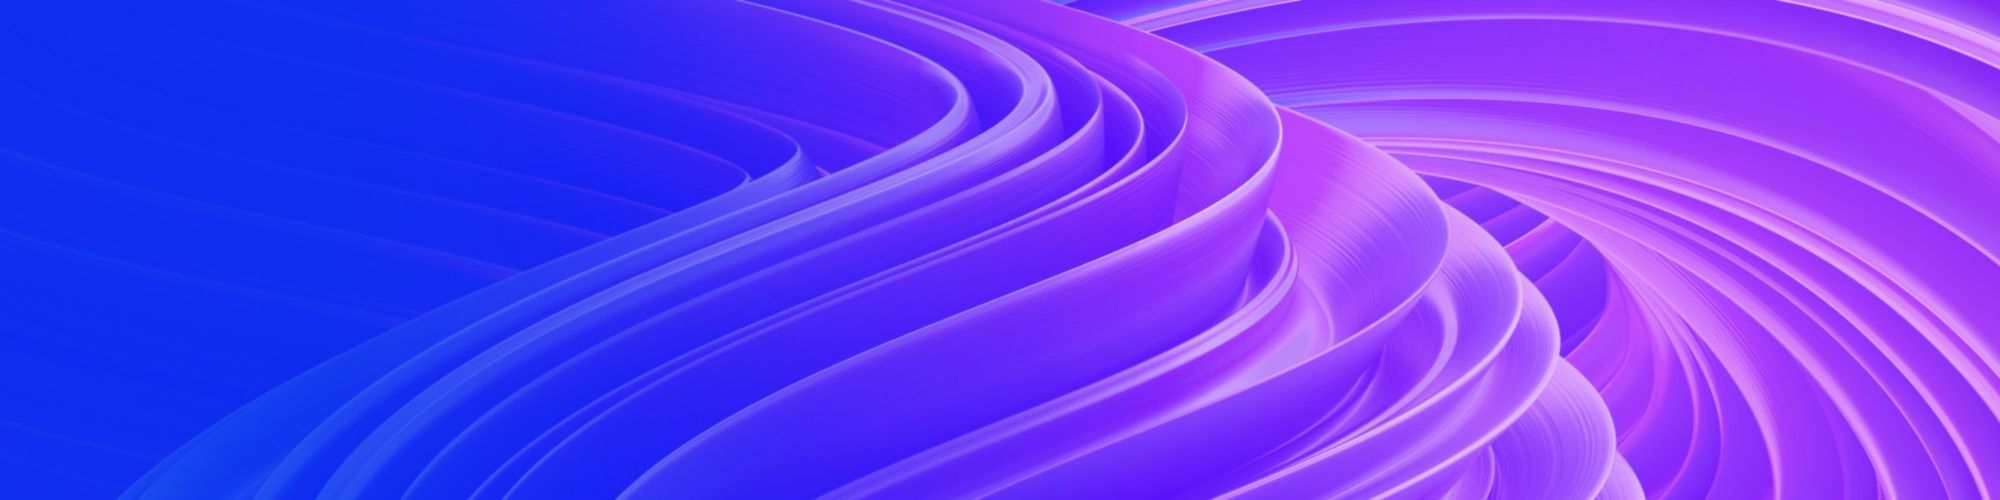 blue purple waves